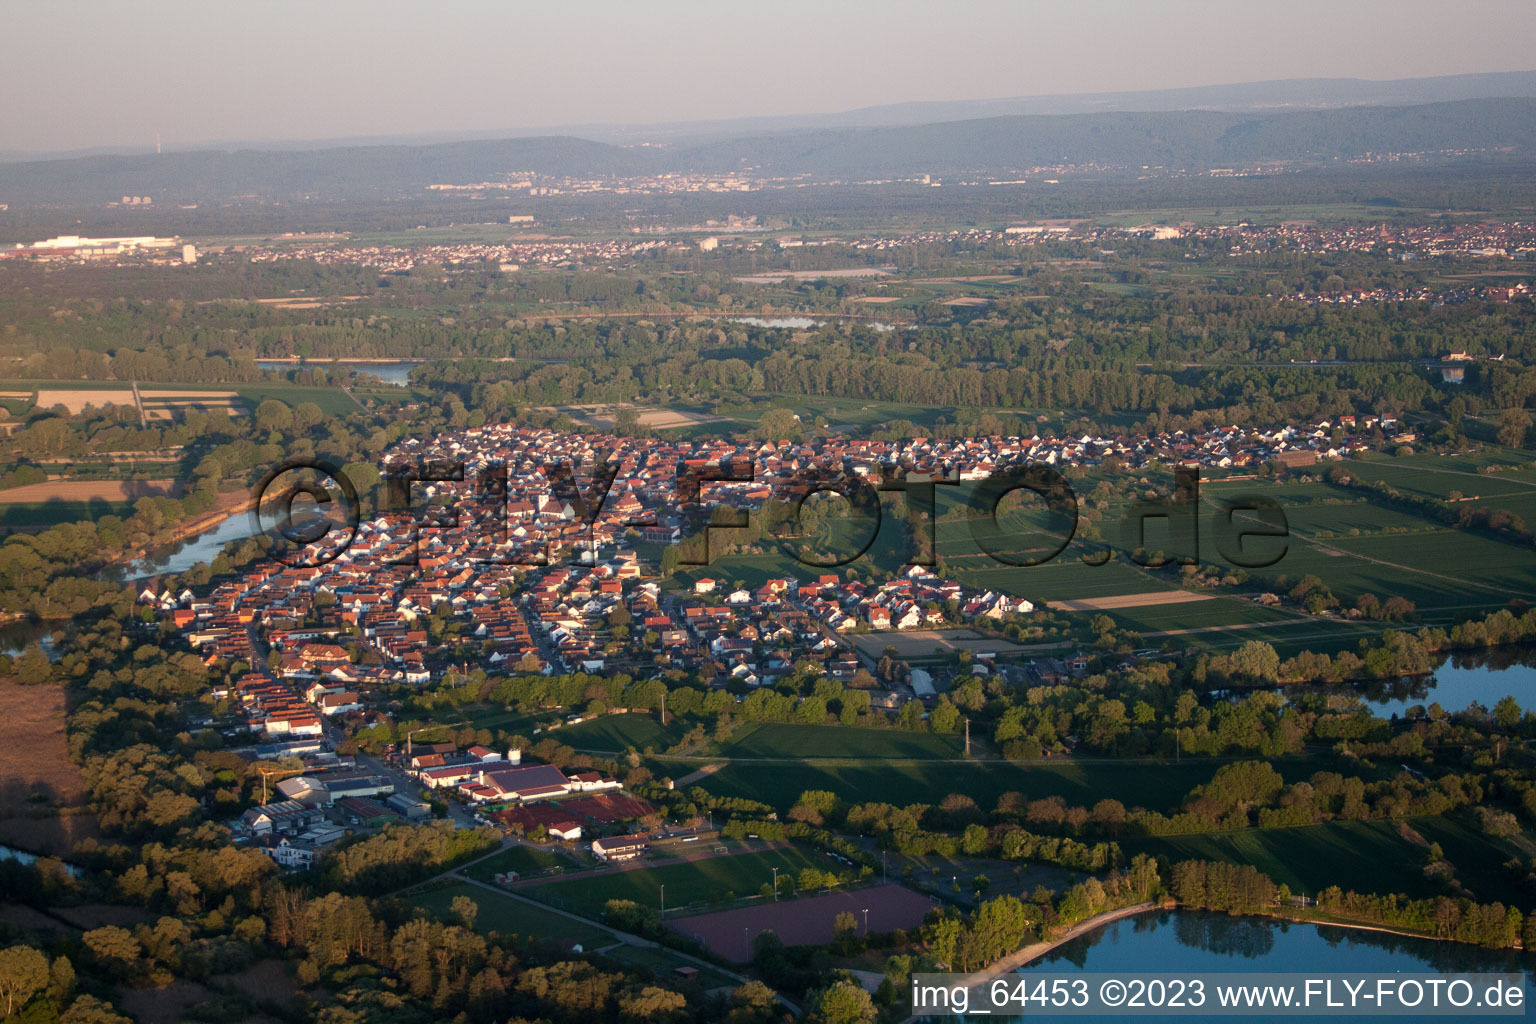 Neuburg in the state Rhineland-Palatinate, Germany from the plane